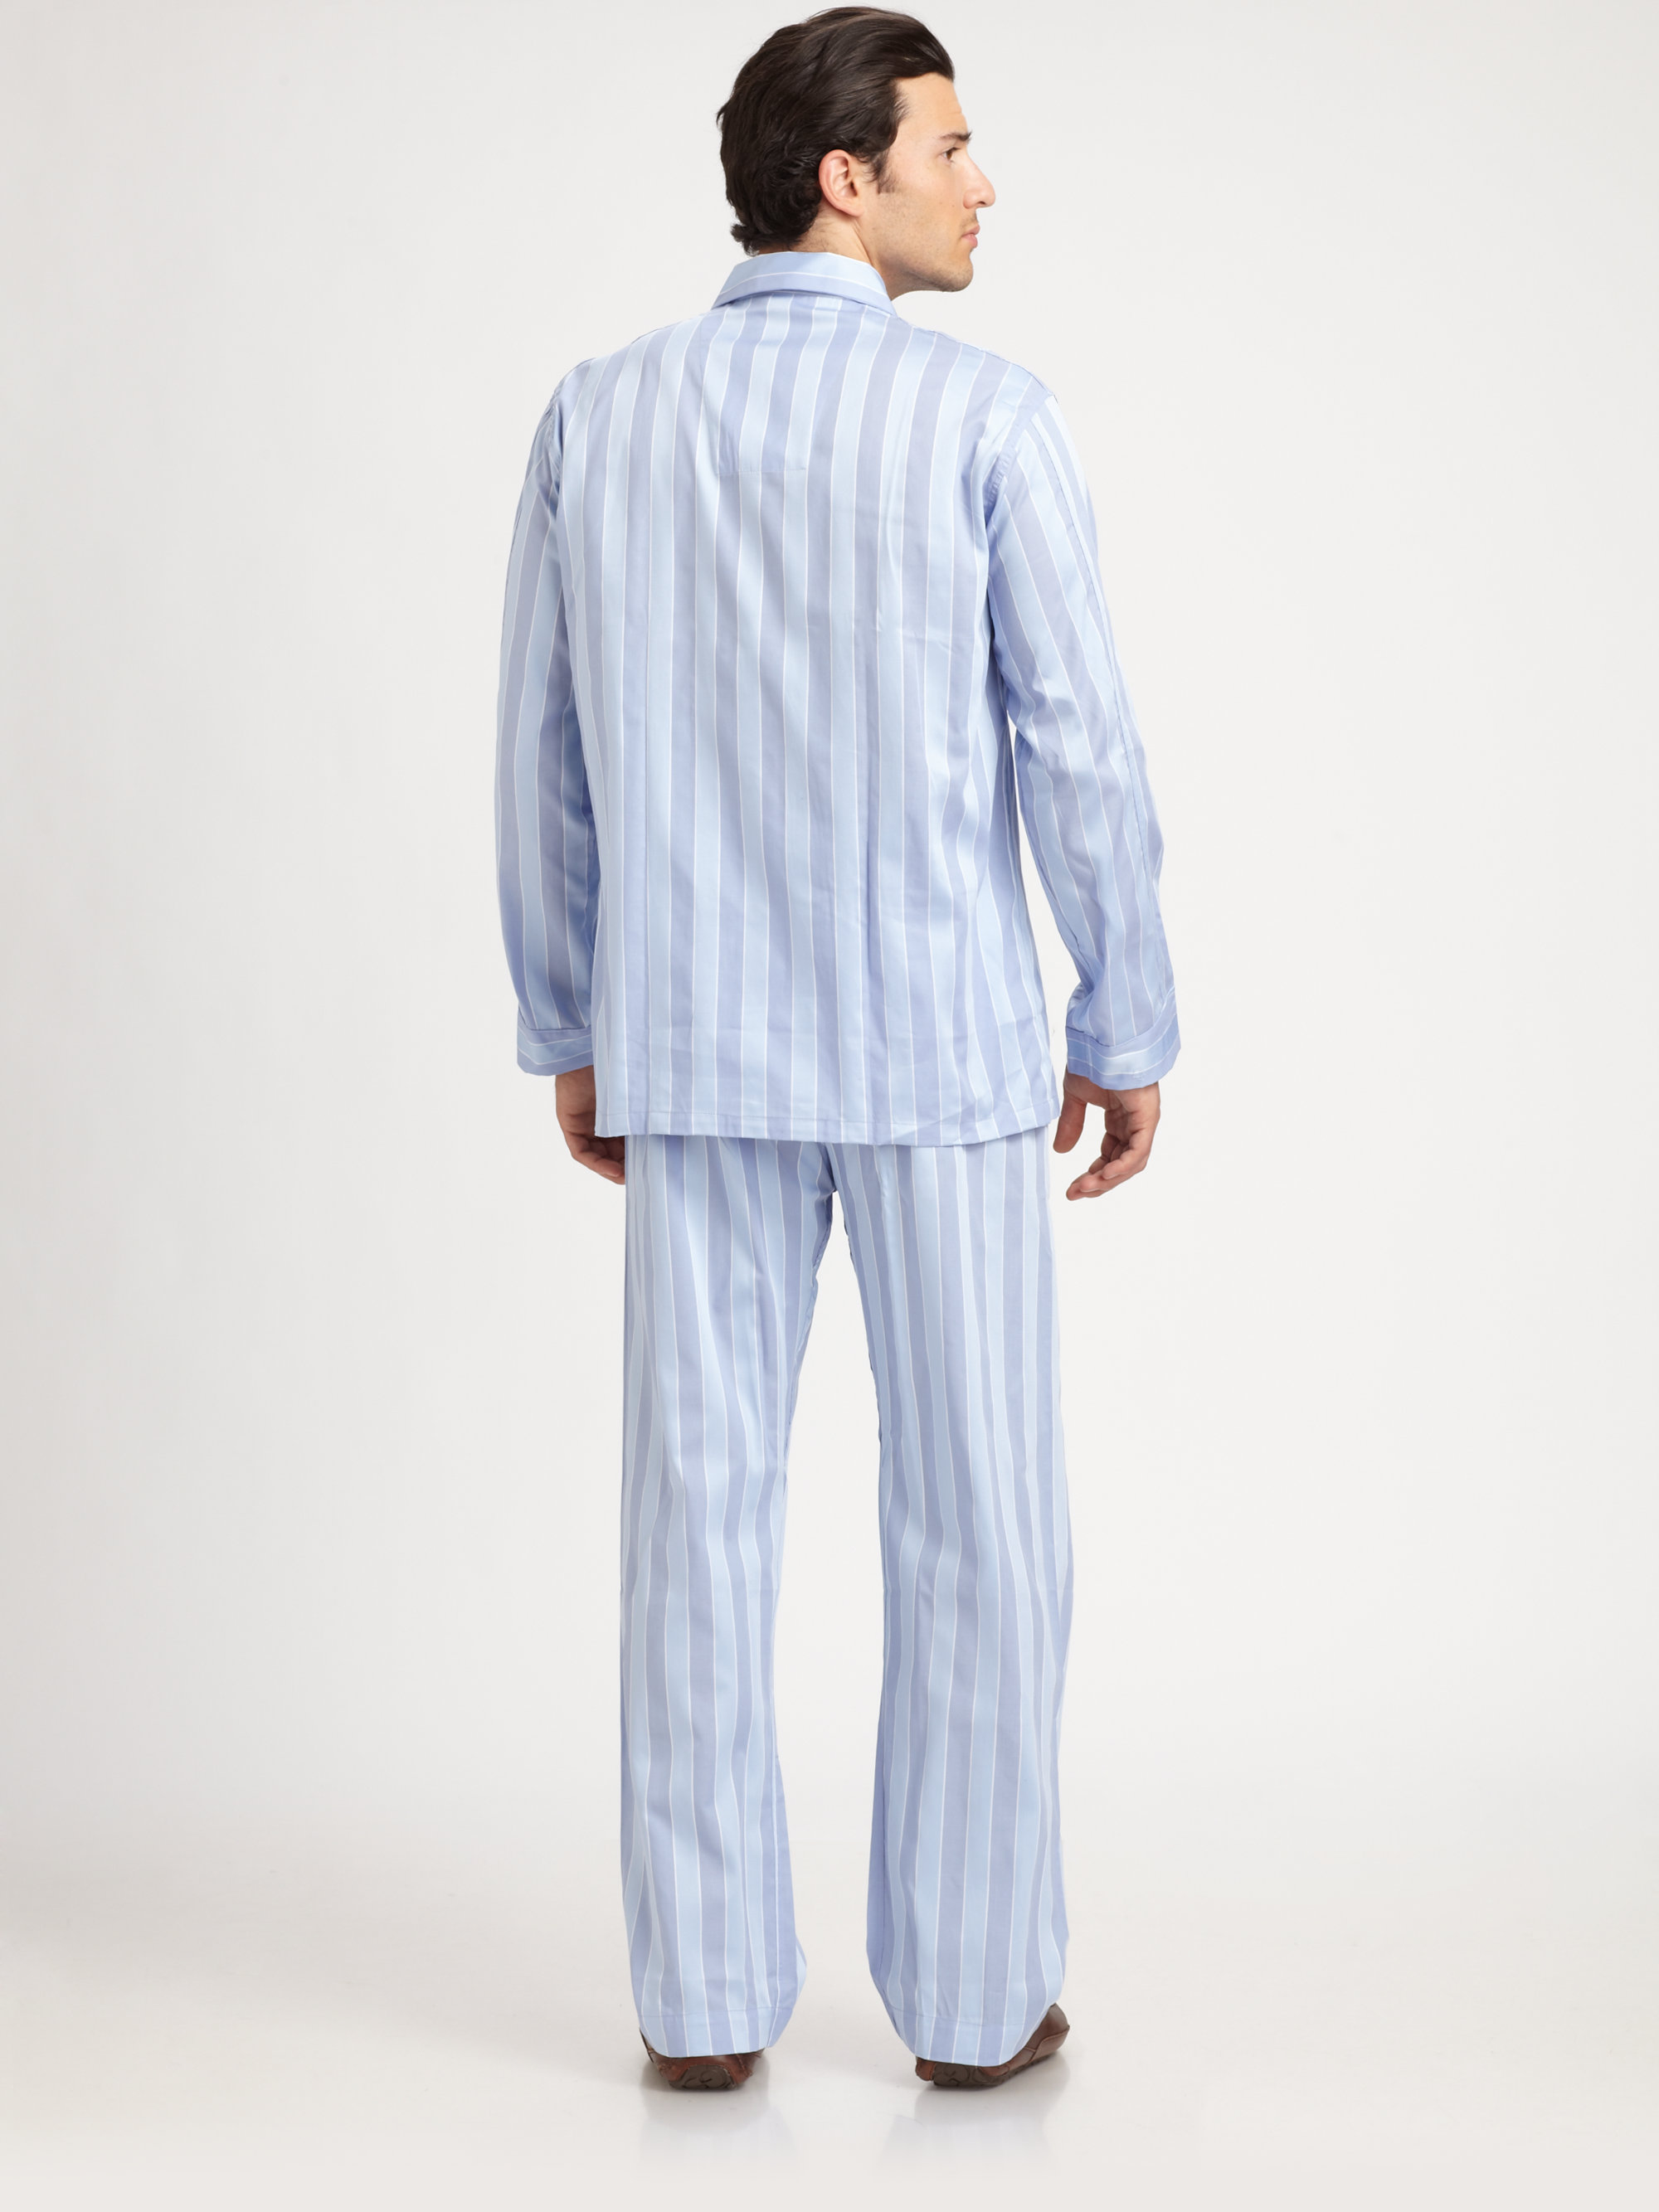 Derek Rose Mens Royal Piped Pajama Set 5005-ROYA040-COLC 